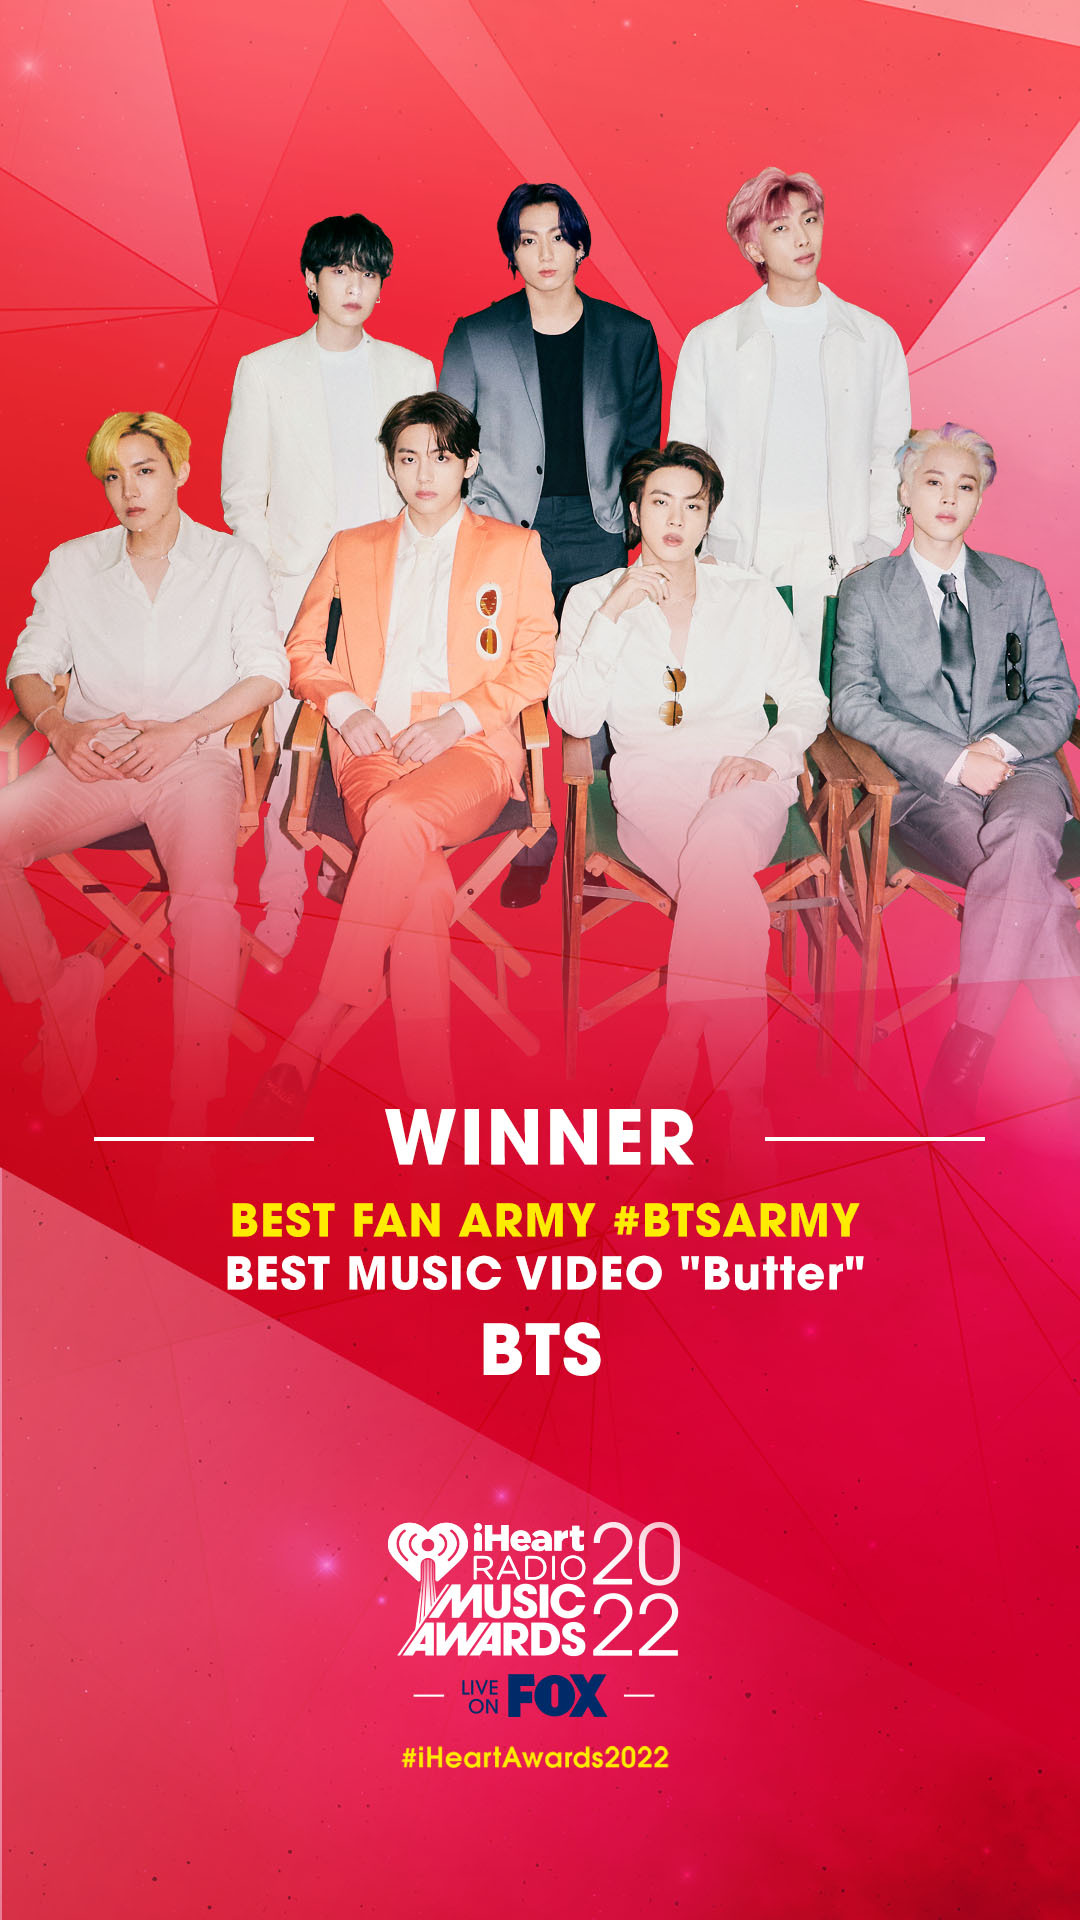 BTS ชนะรางวัลถึง 2 รางวัล จากงาน iHeartRadio Music Awards 2022